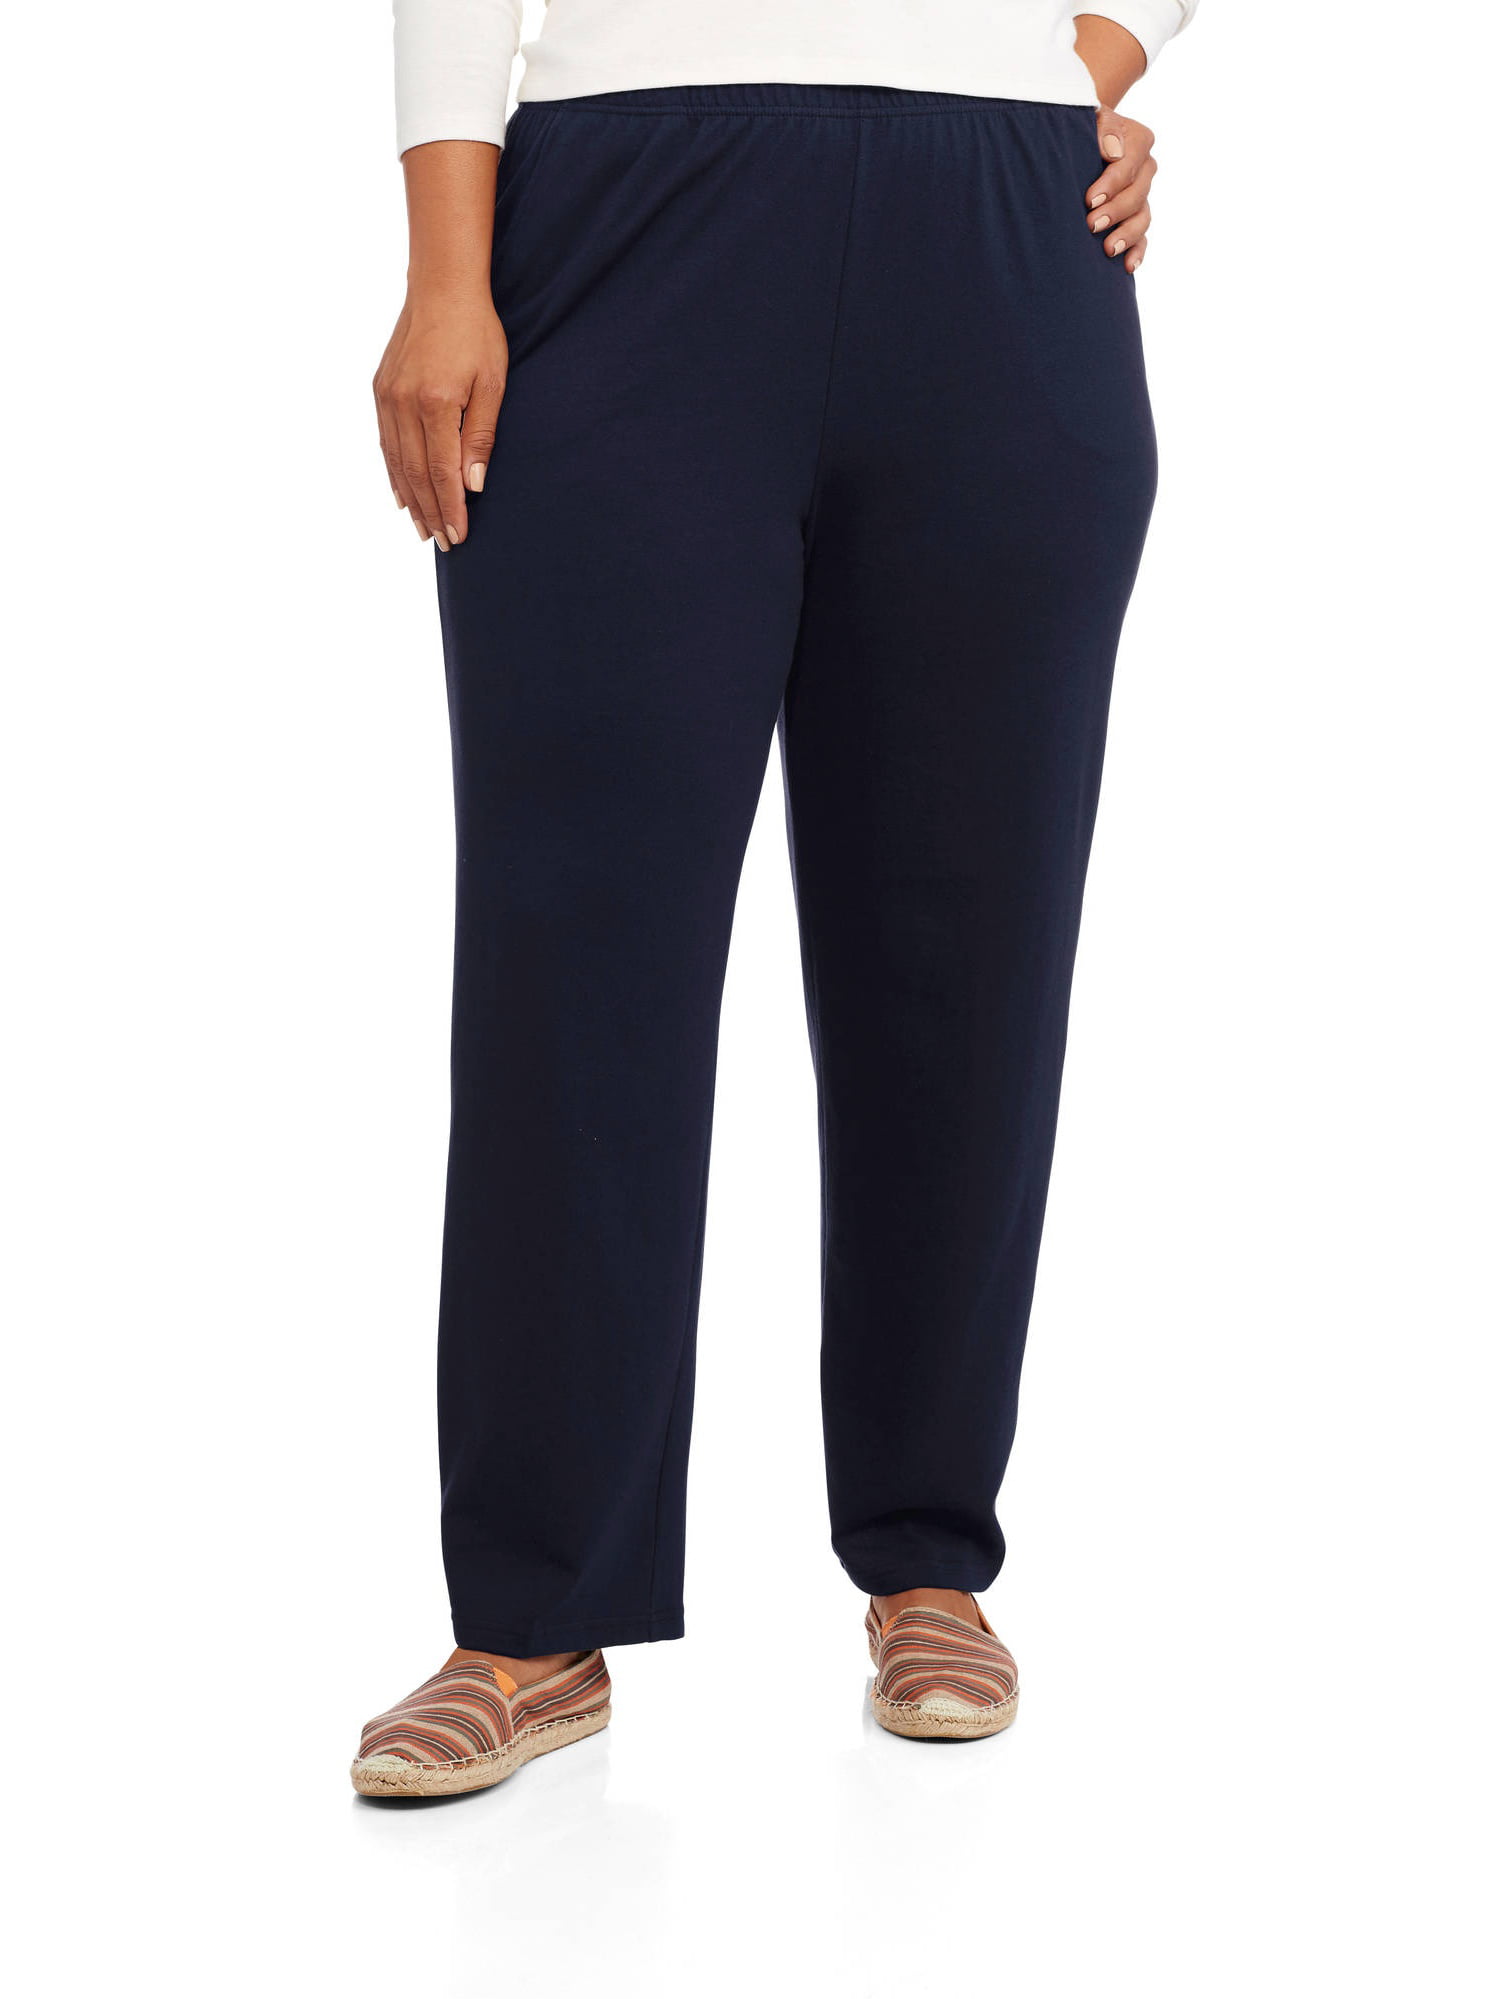 Women's Plus-Size Essential Pull-On Knit Pants - Walmart.com